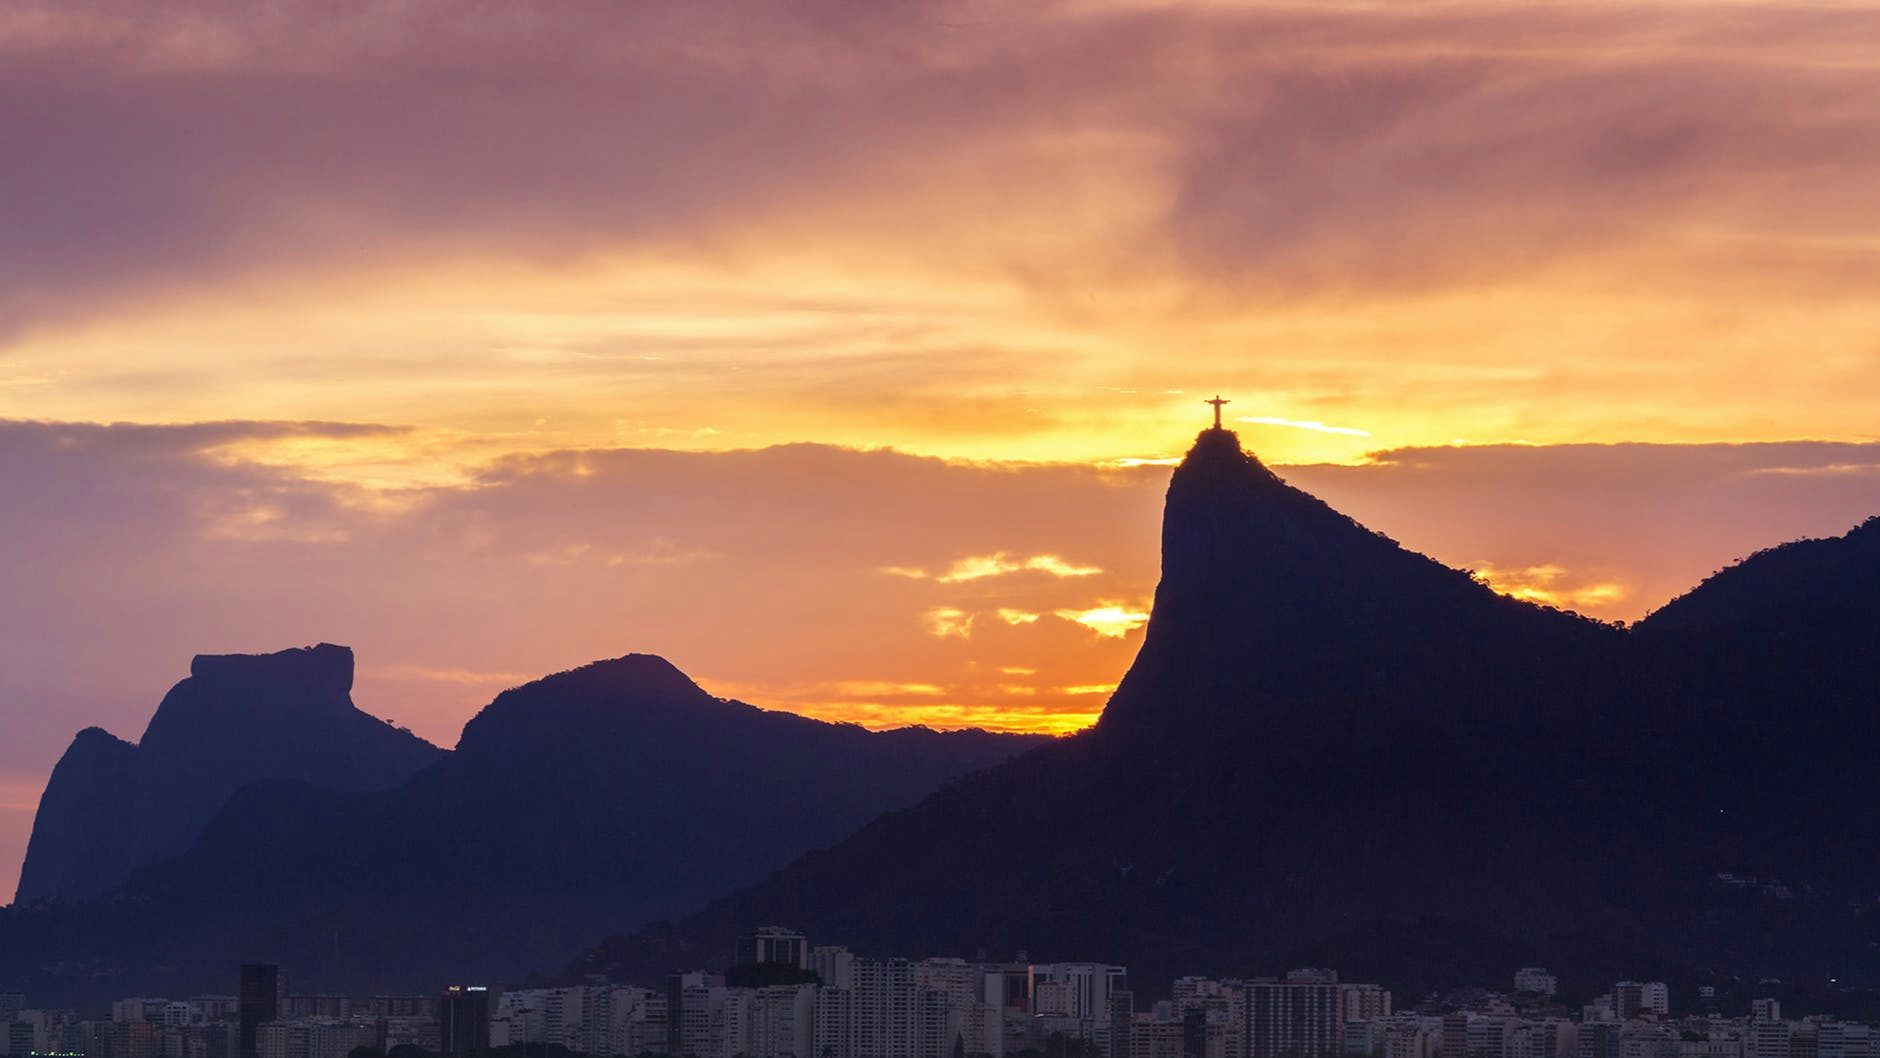 Enjoy your vacation in Rio!